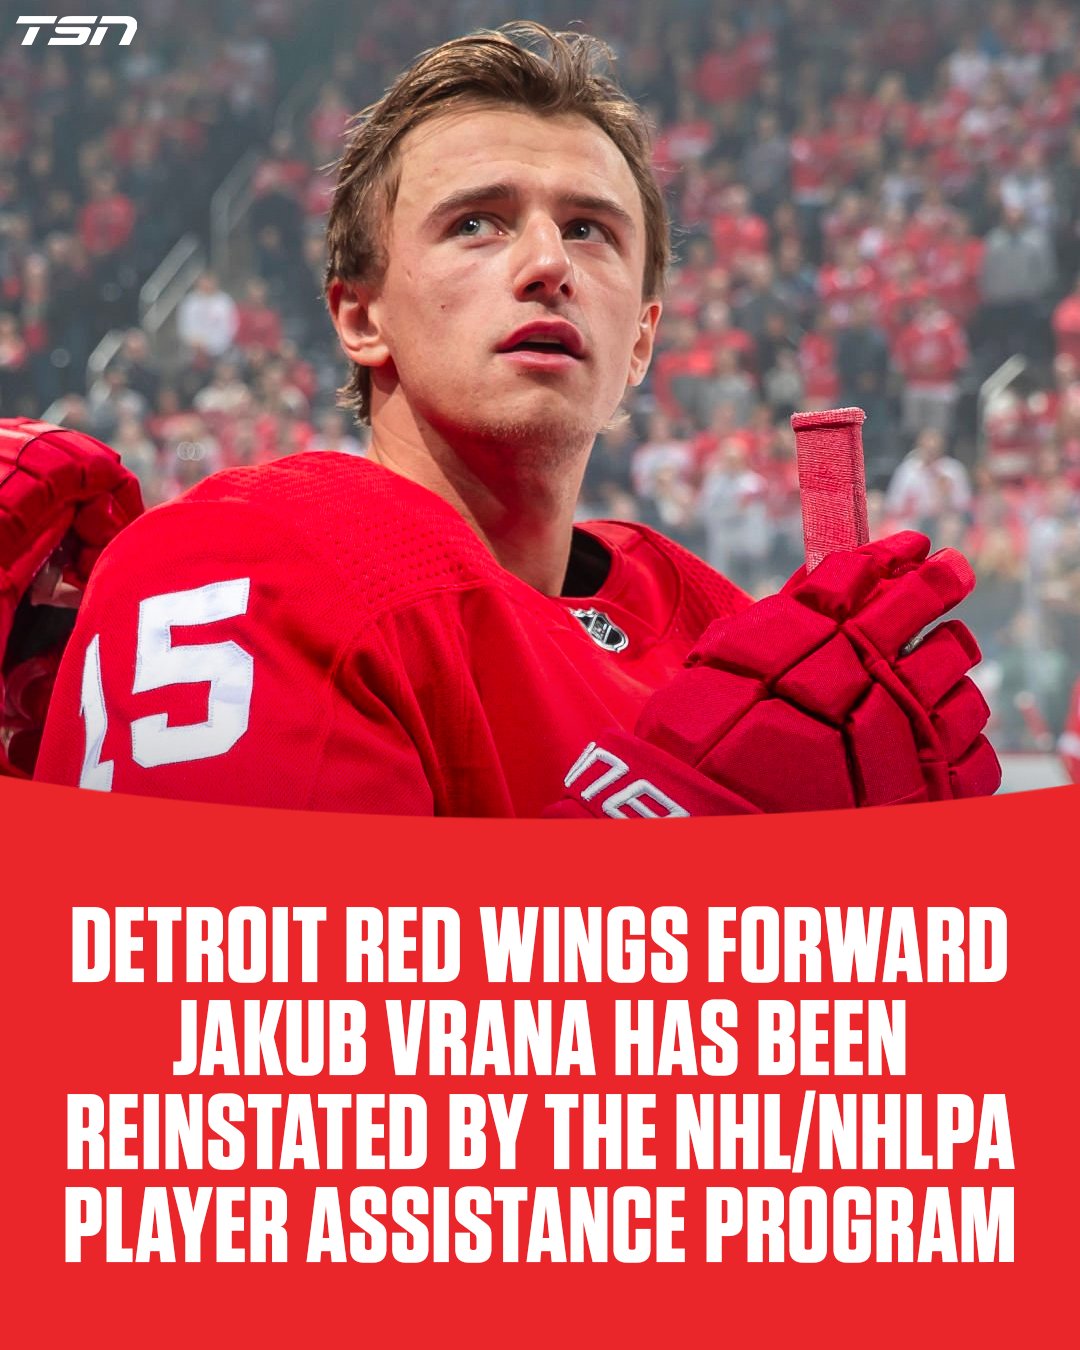 Red Wings forward Jakub Vrana reinstated by NHL/NHLPA player assistance  program